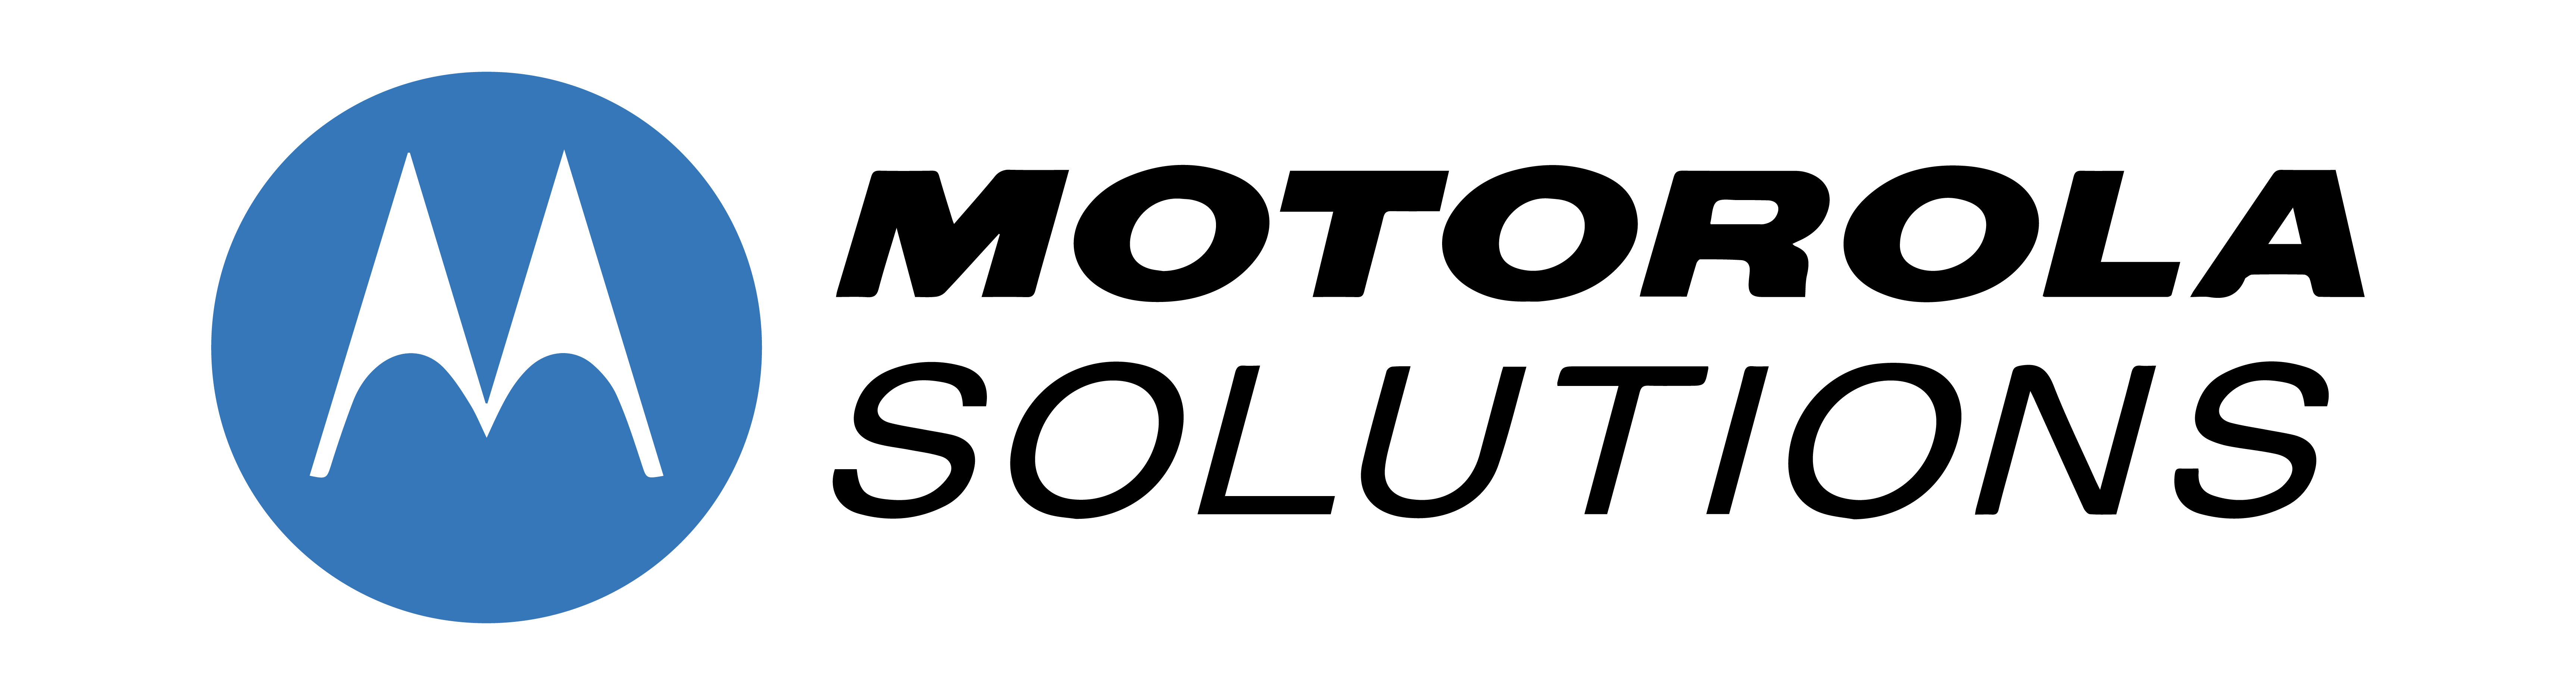 moto-new